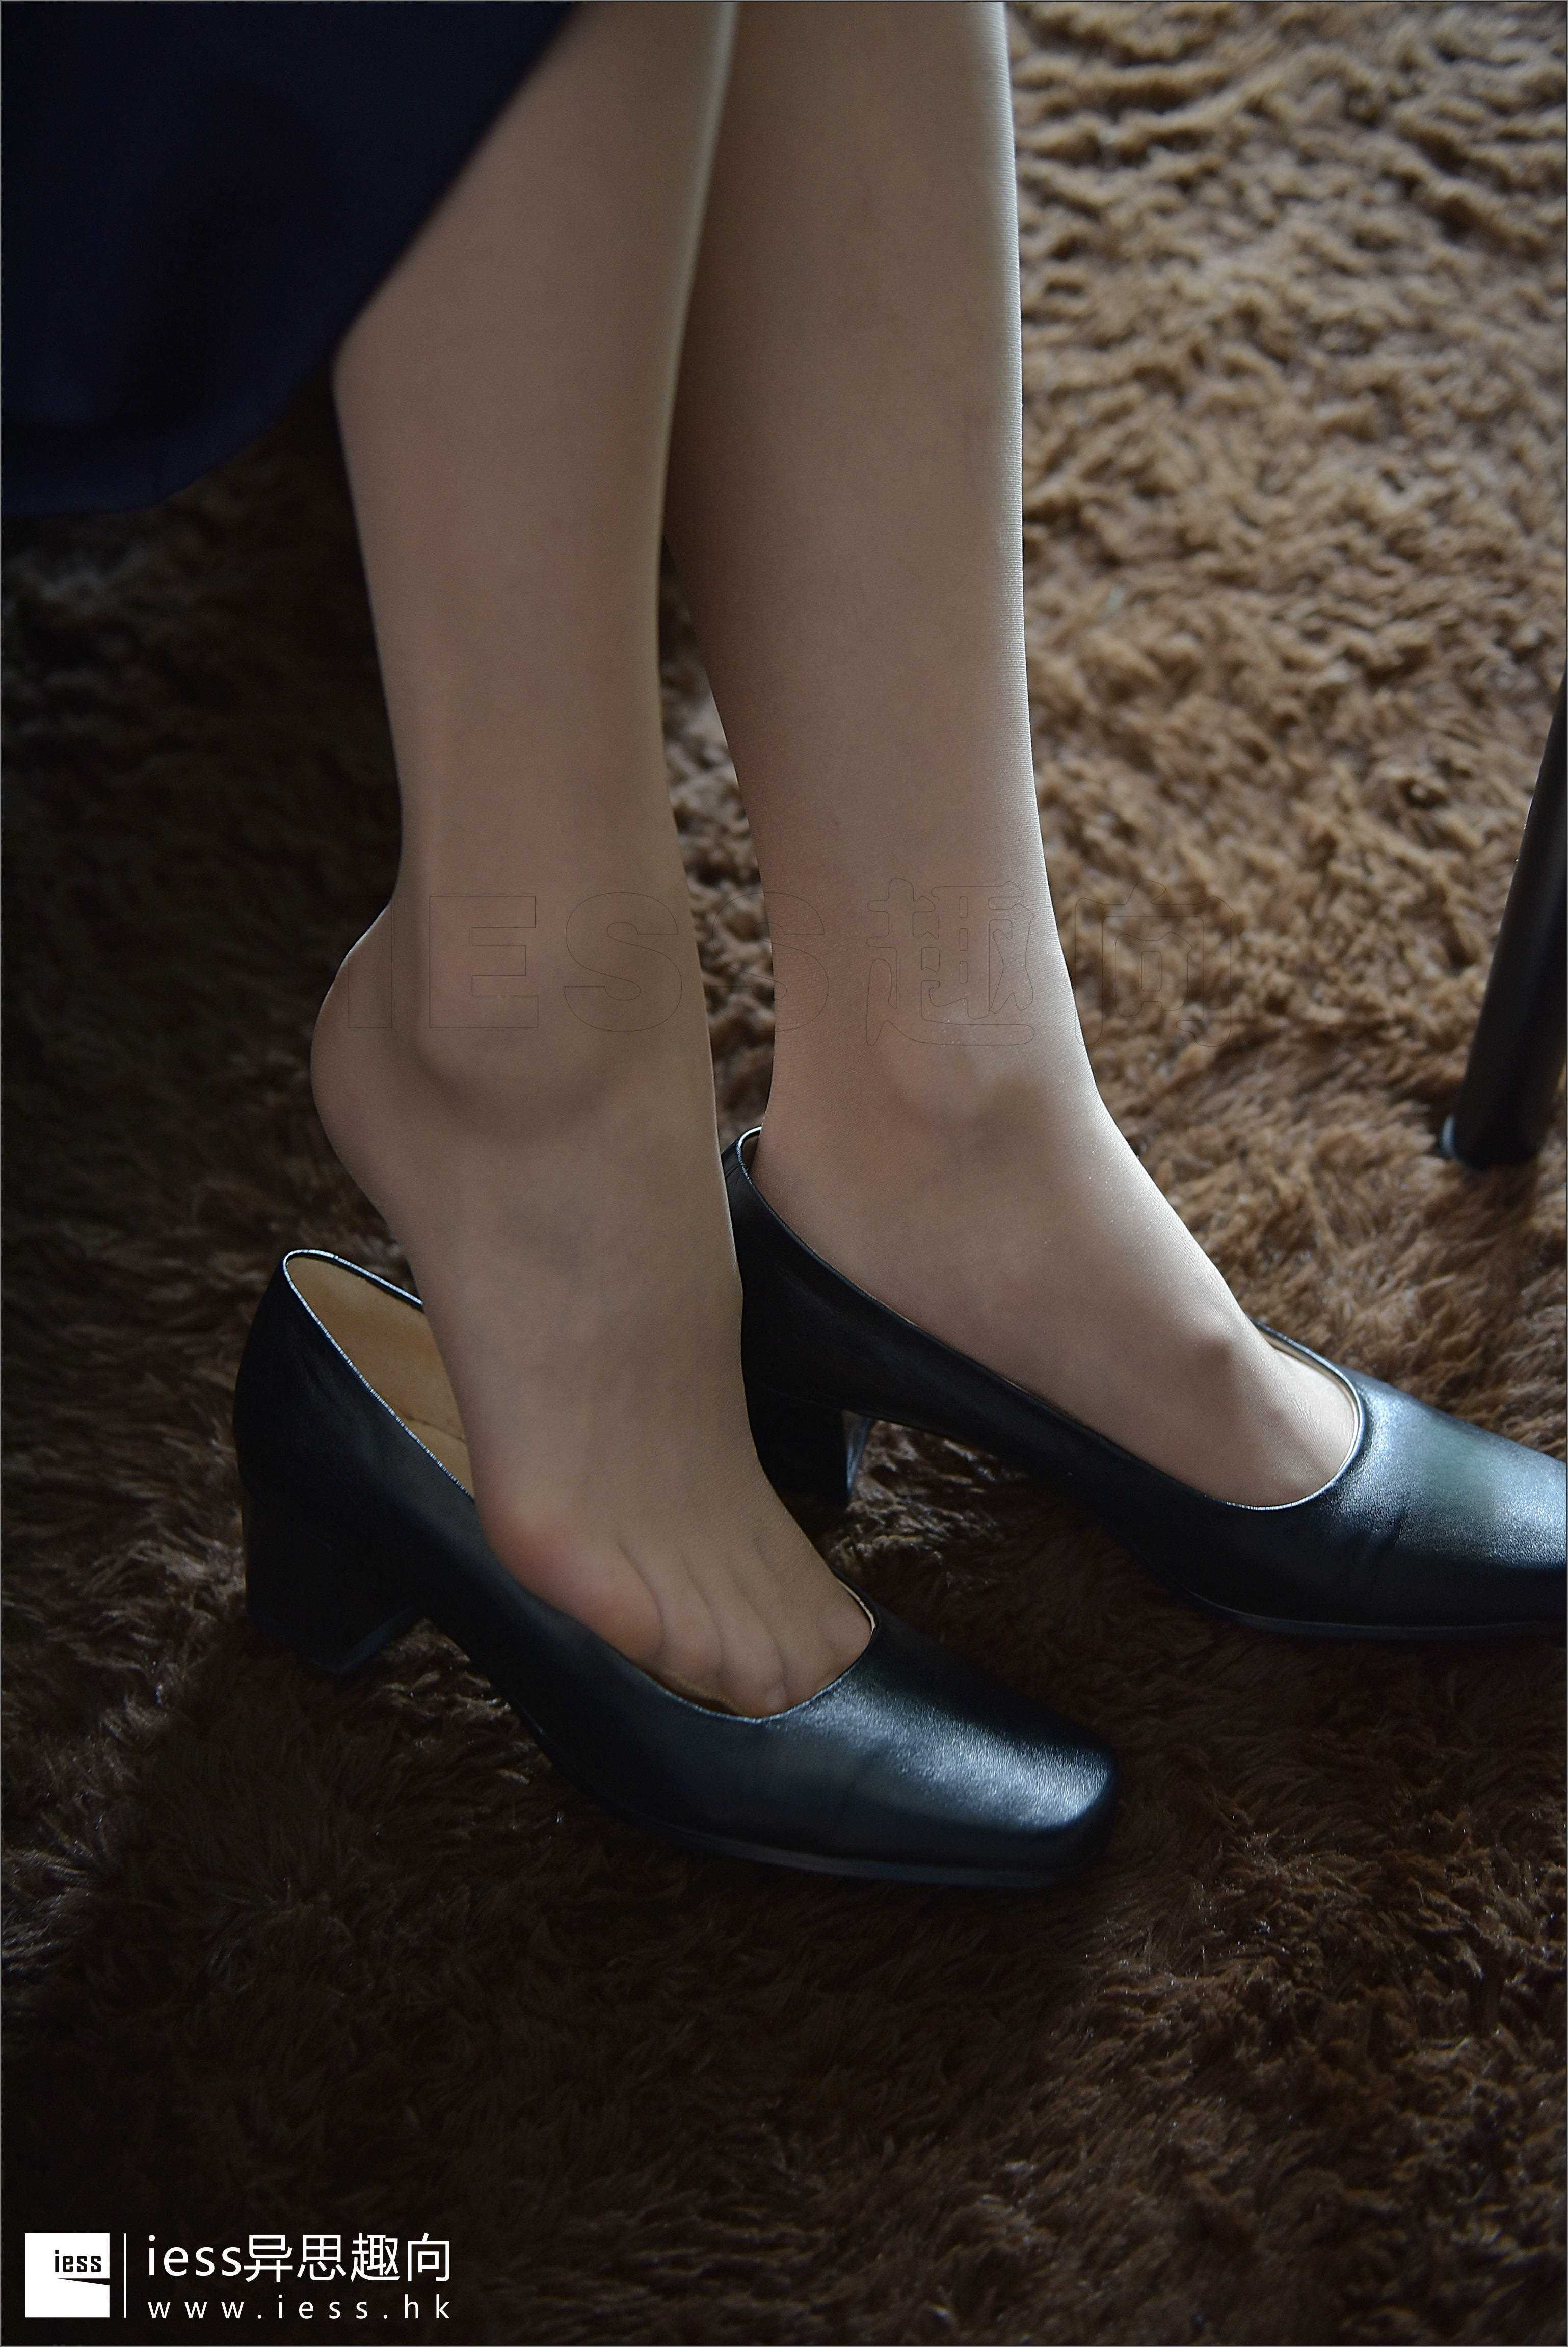 China Beauty Legs and feet 225